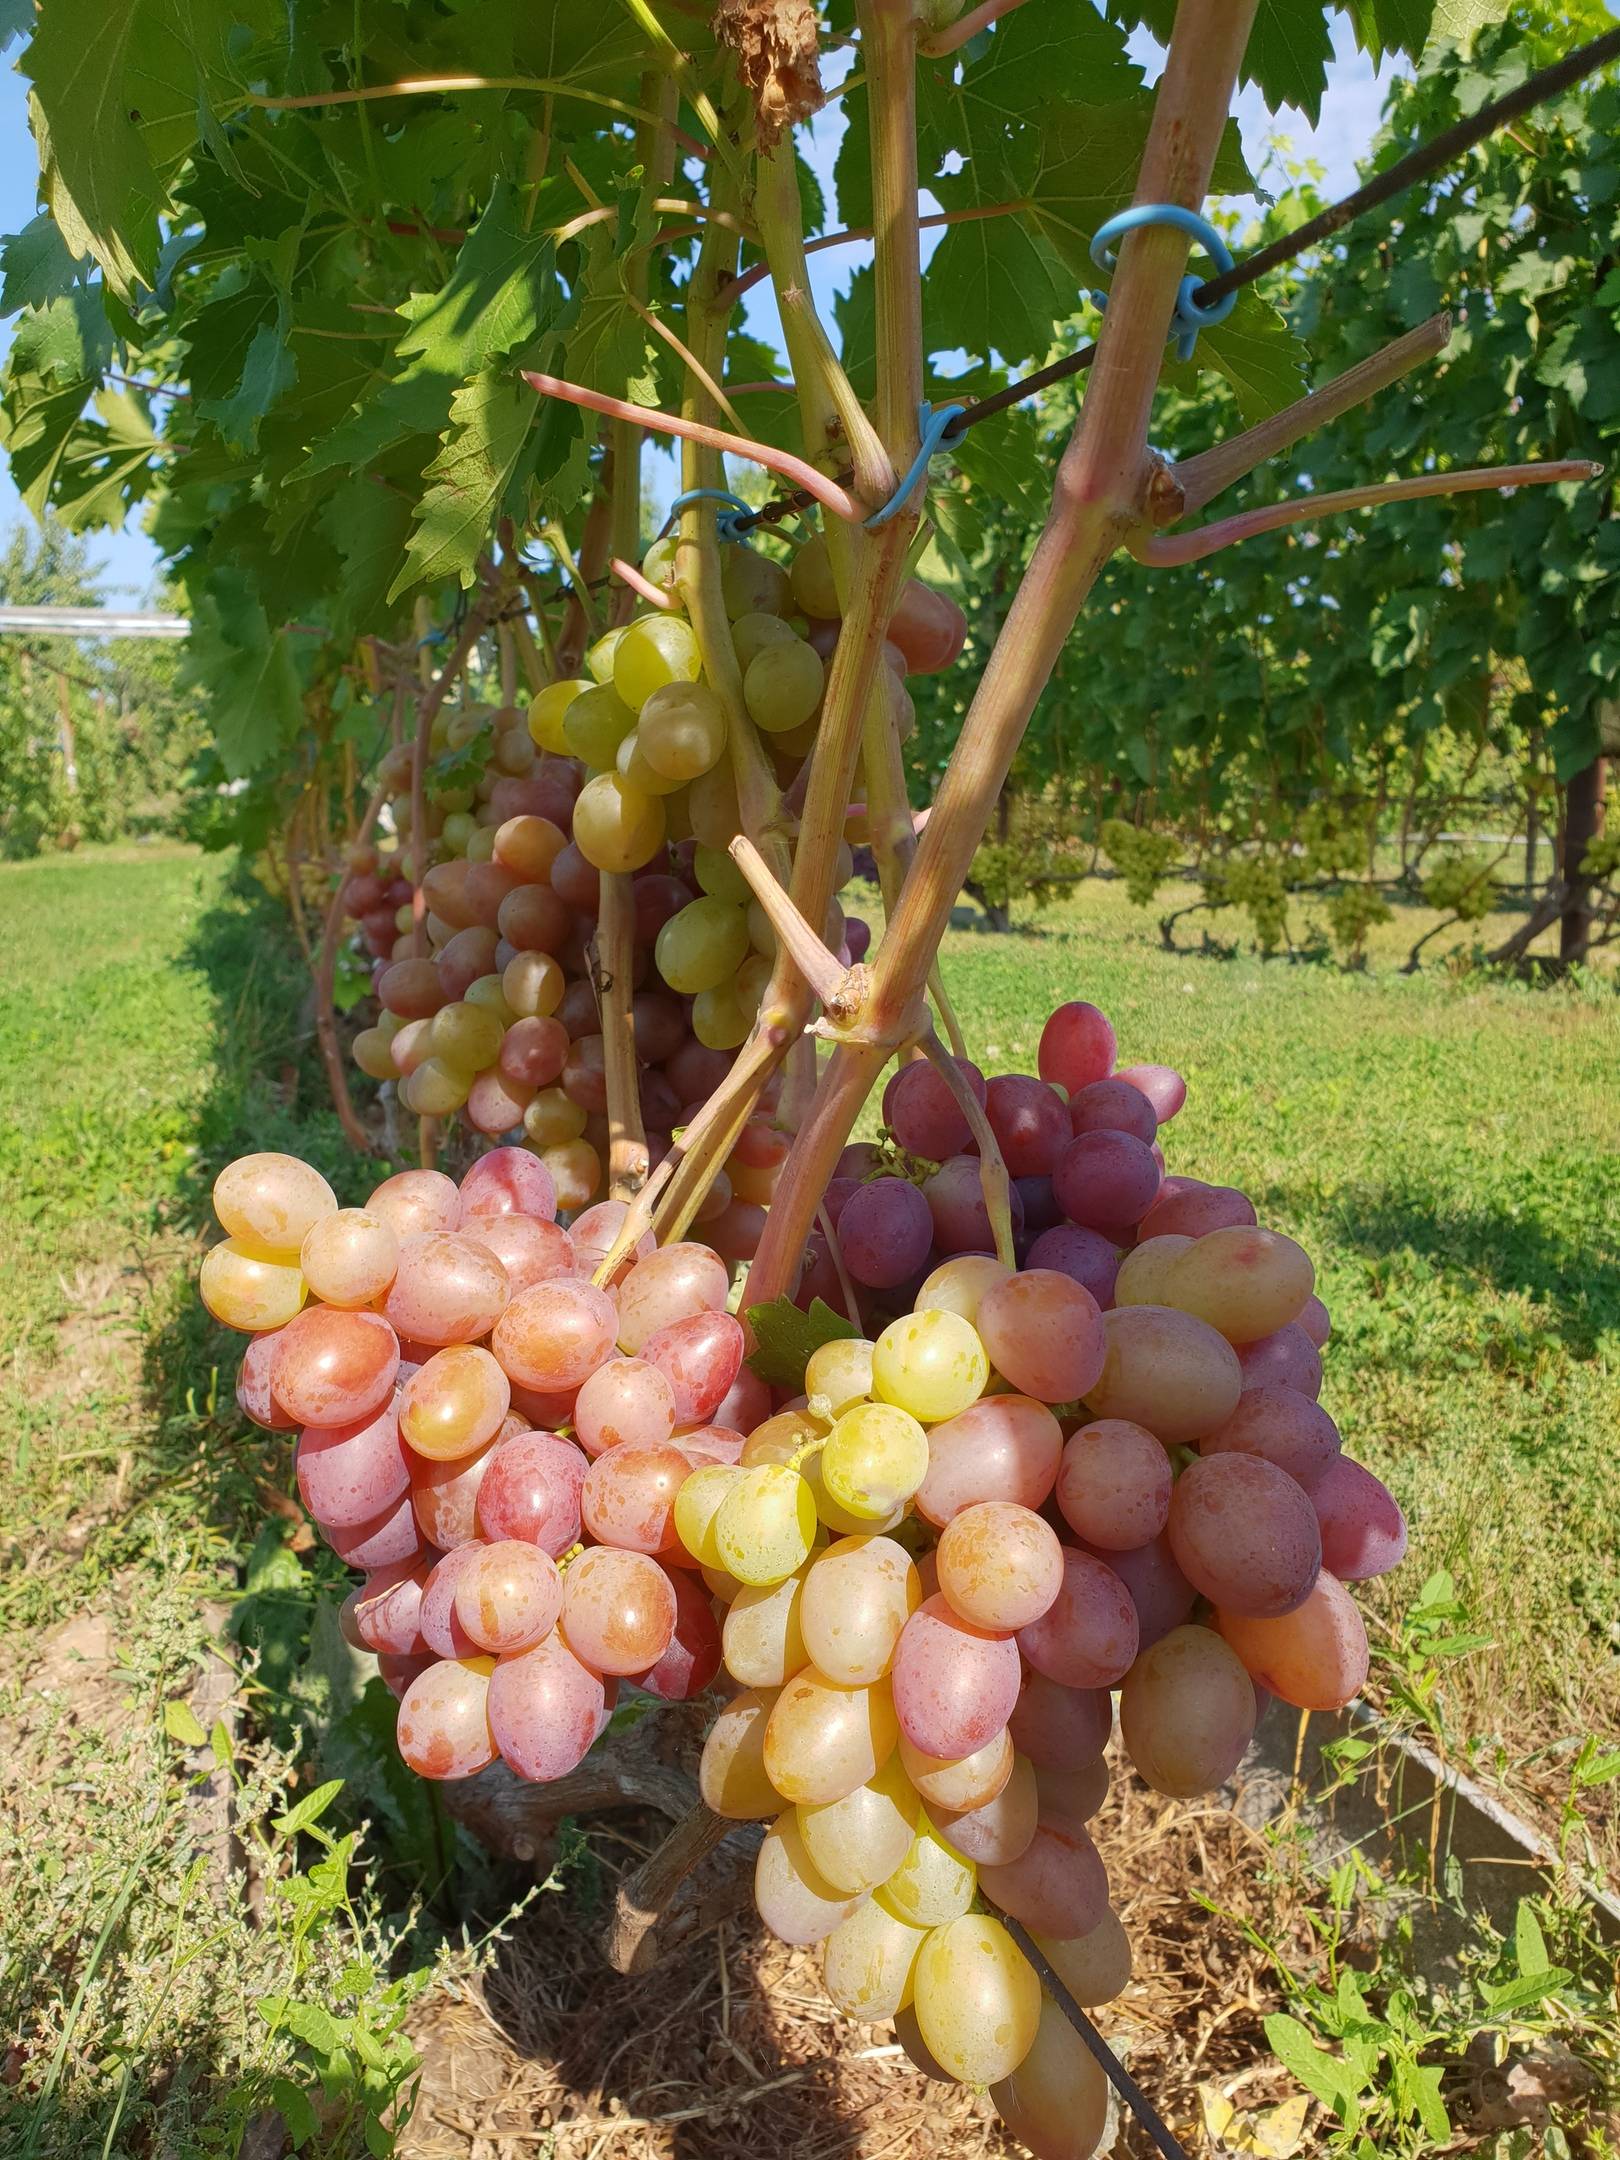 Шираз (сира): описание сорта винограда, характеристики, вкус вина